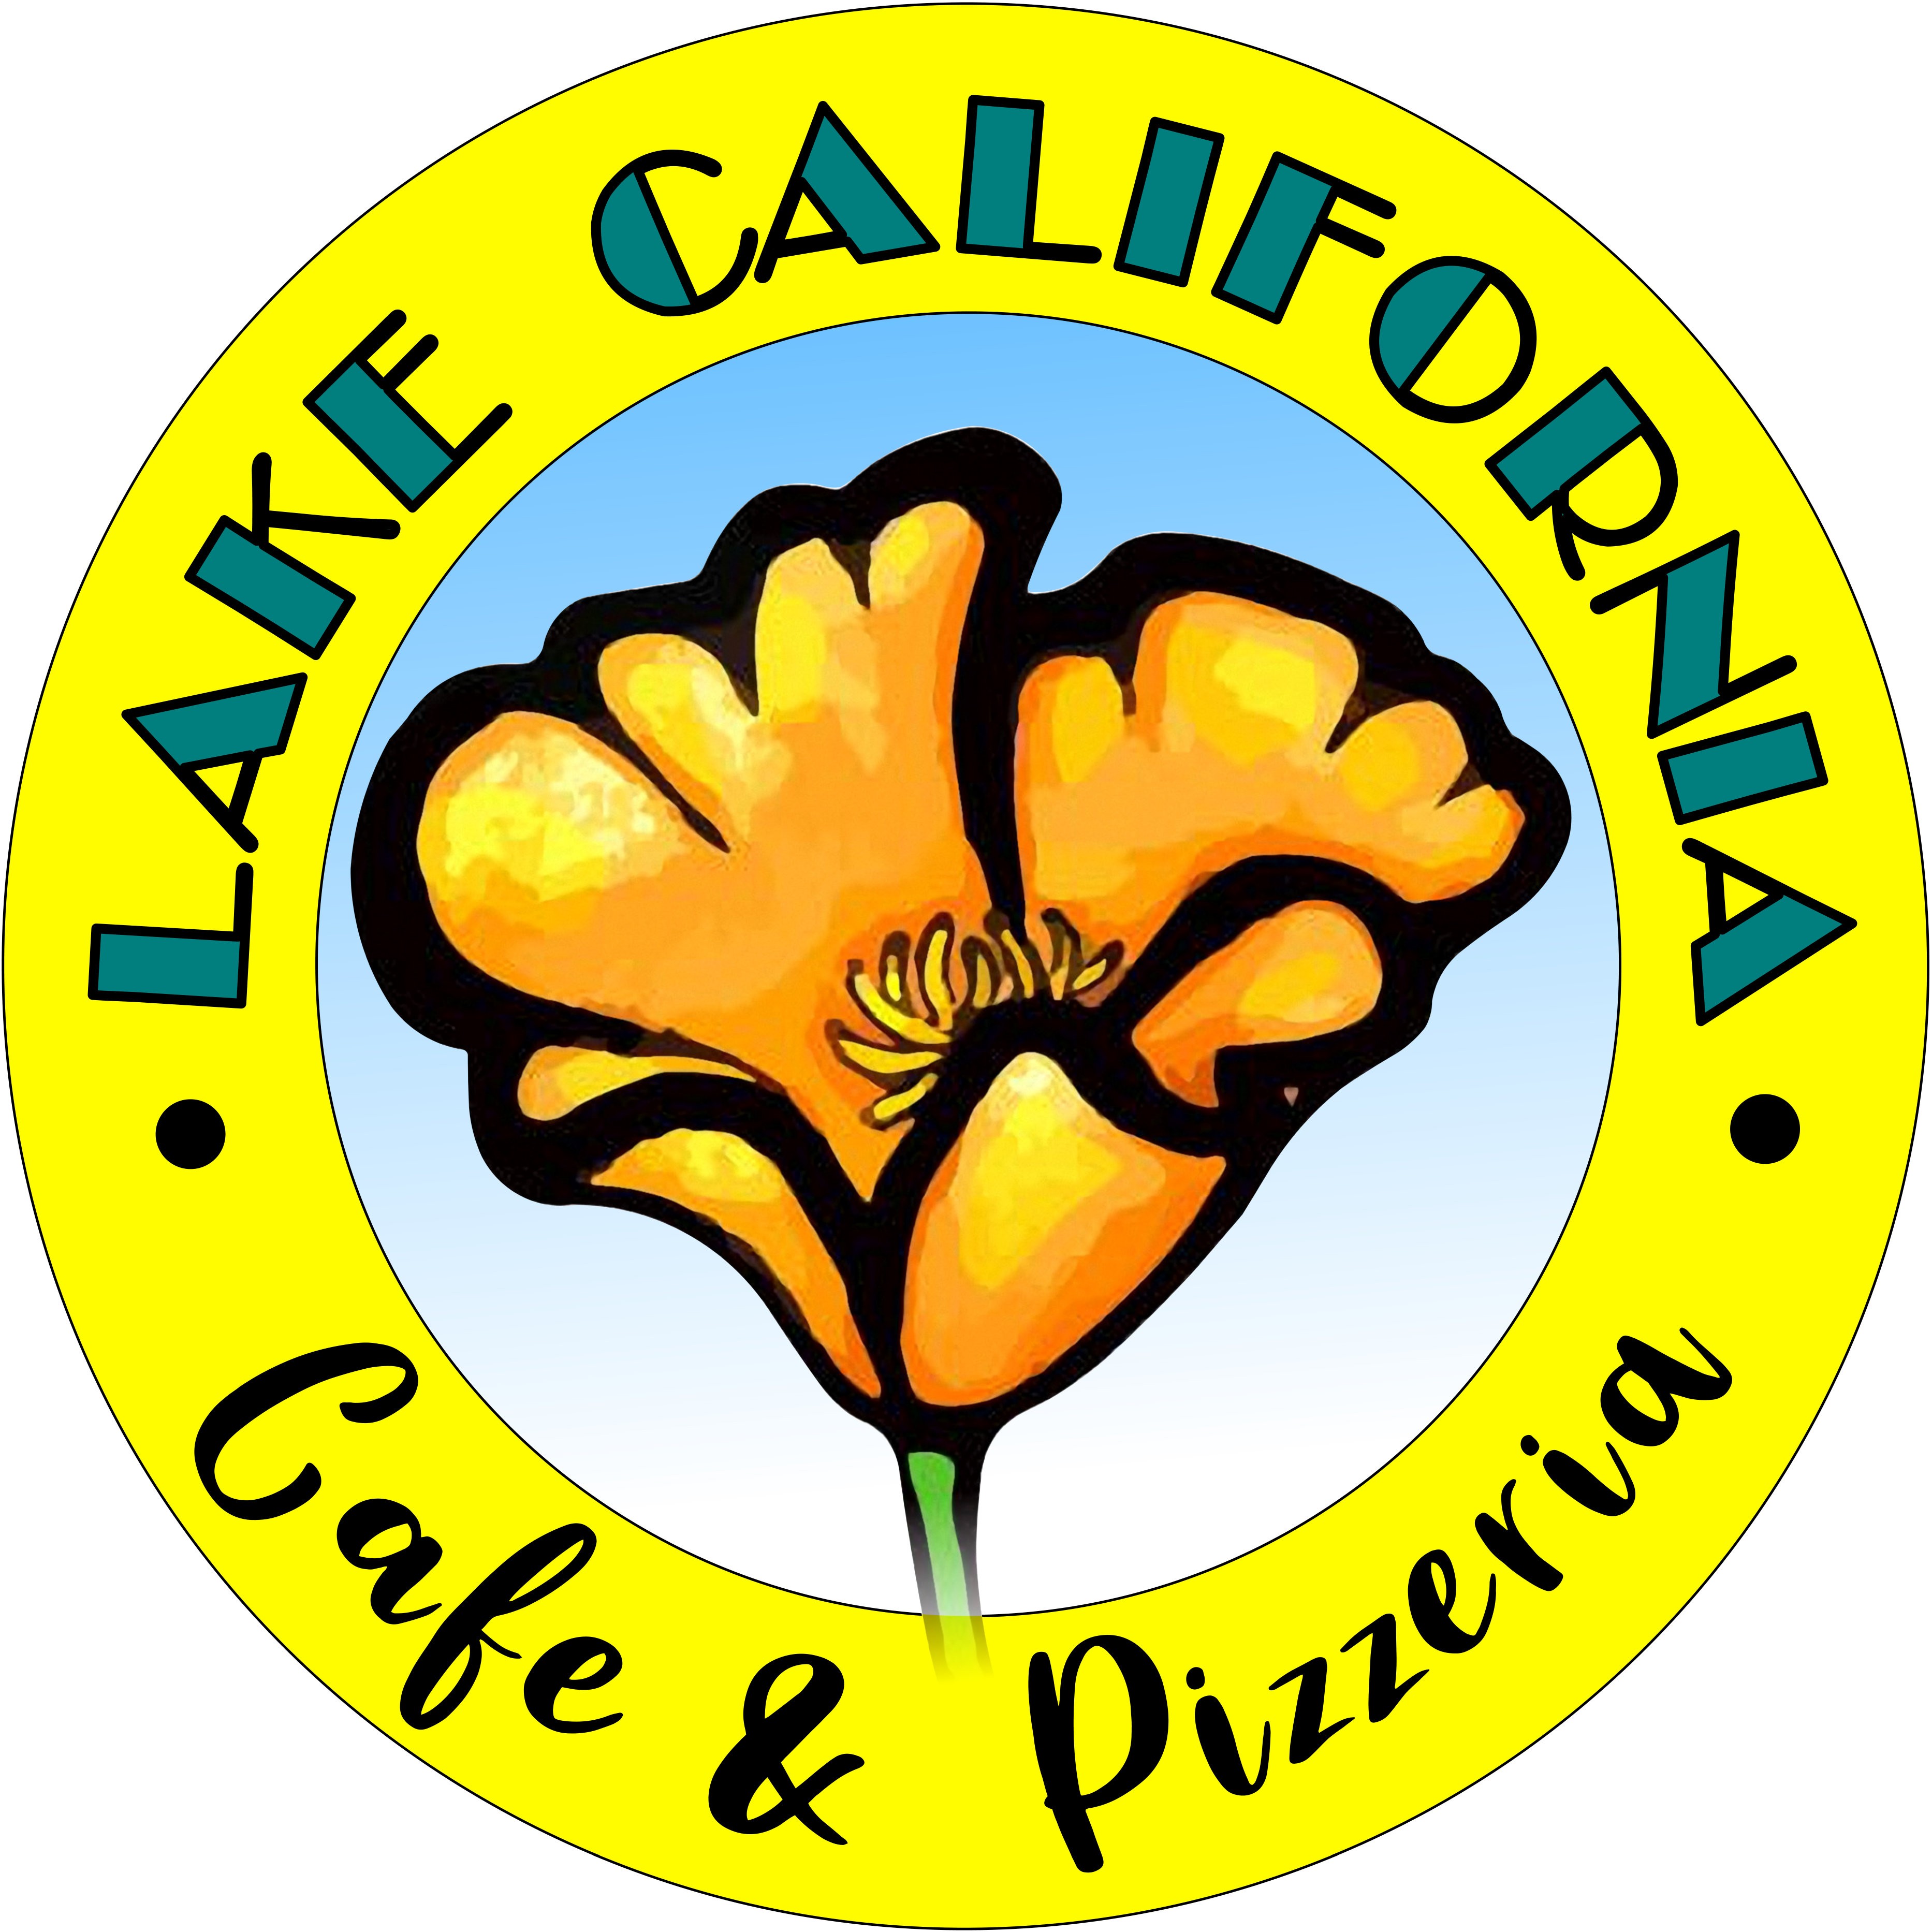 Lake California Cafe & Pizzeria 19632 Lake California Dr